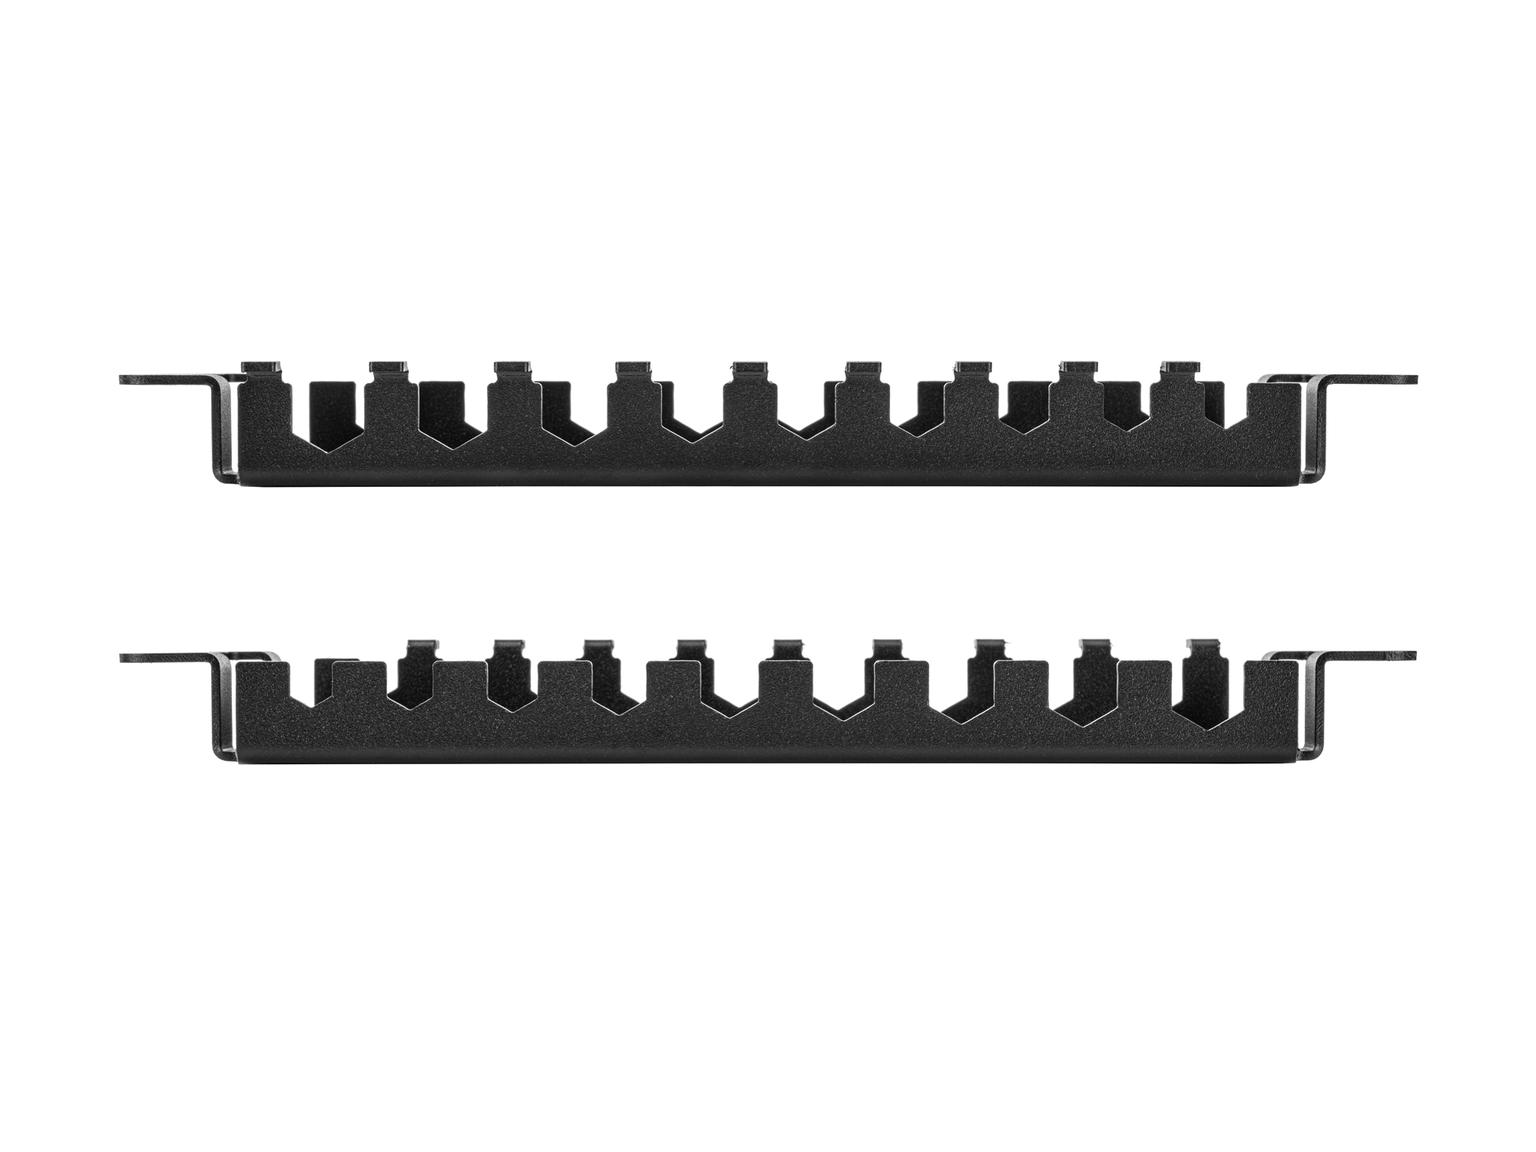 TEKTON OKH62502-T 9-Tool Hex L-Key Rack (11-19 mm)